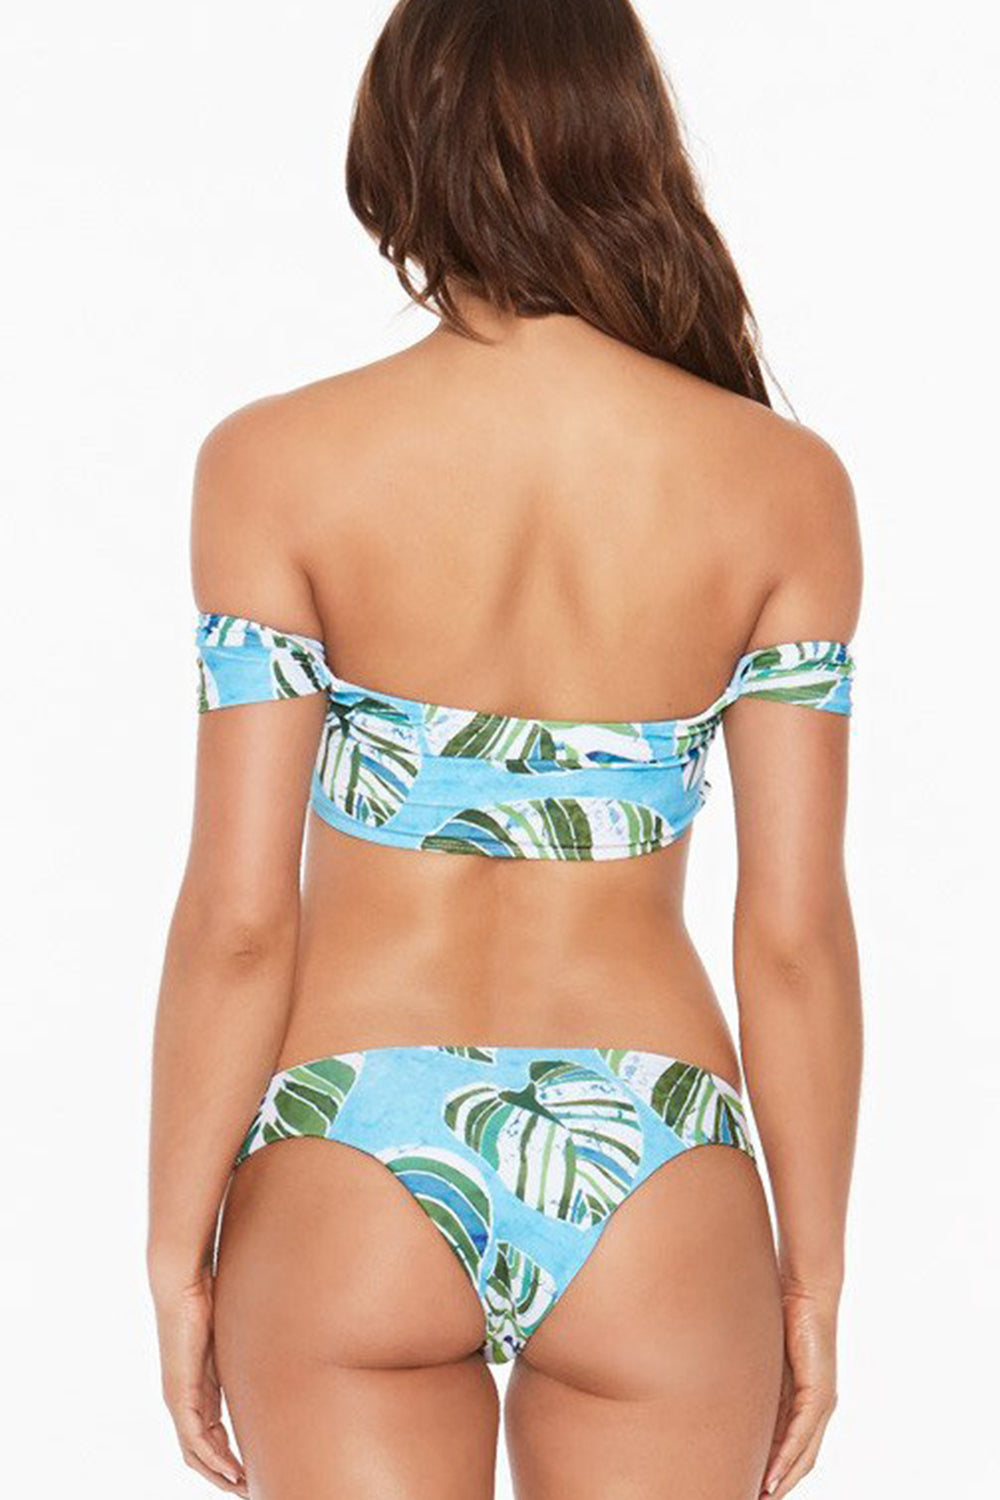 Iyasson Blue Leaves Printing Off-the-shoulder Bikini Sets